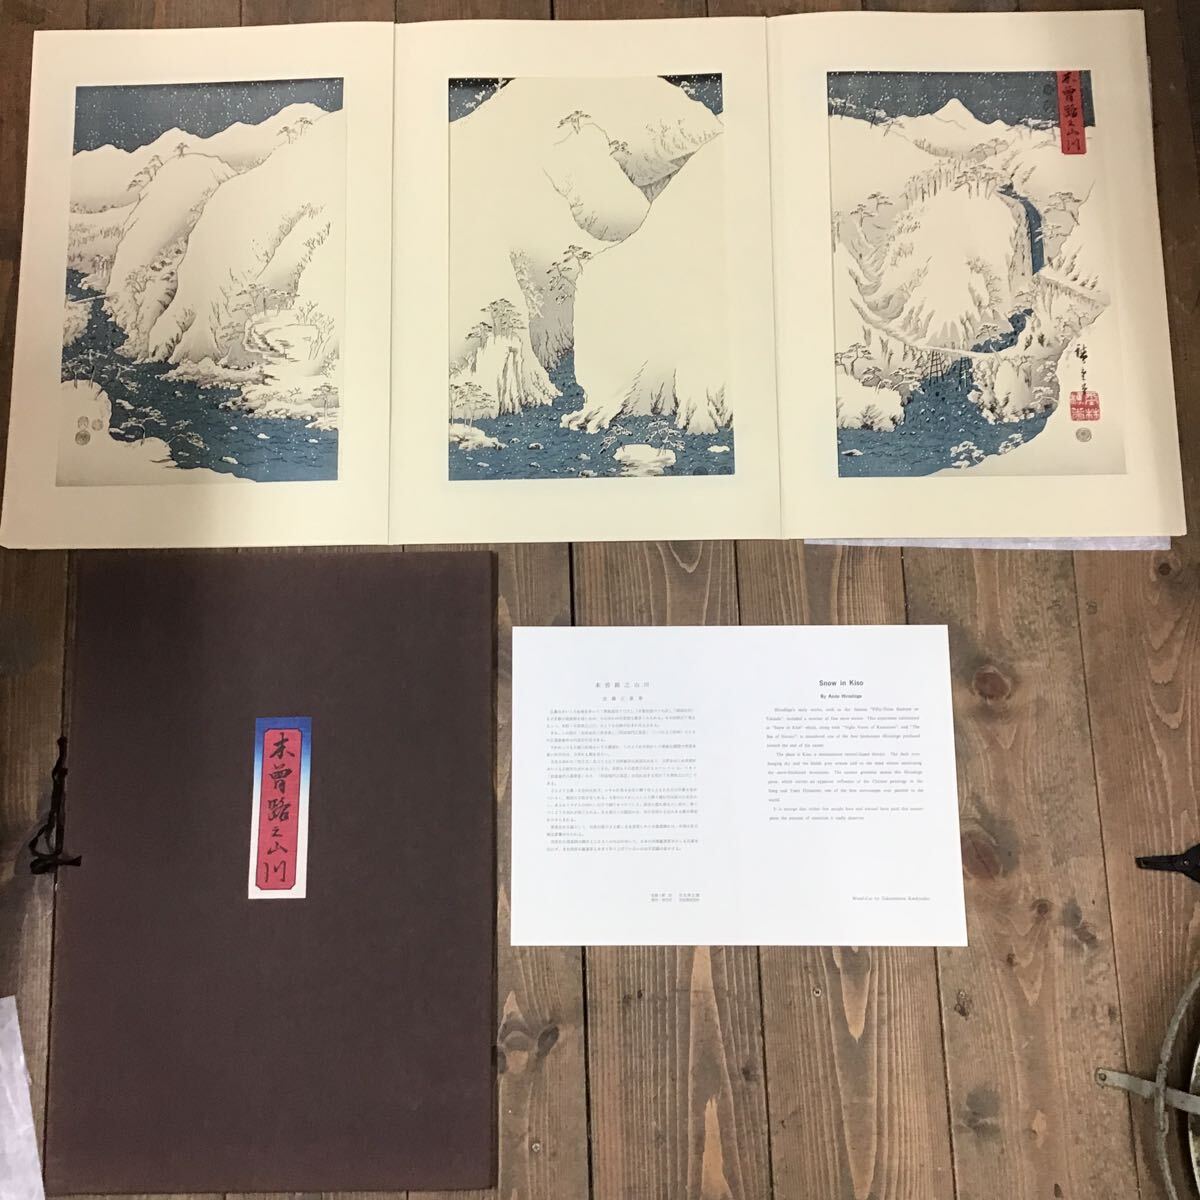 [Authentique] Hiroshige Ando, Hiroshige Utagawa, Kiso-ji no Yamakawa, Institut Takamizawa, Reliure 3 feuilles, Tadao Takamizawa, peinture d'un lieu célèbre, réimpression imprimer, gravure sur bois imprimée à la main, Édition Takamizawa, Nishiki-e, peinture, Ukiyo-e, Peinture, Ukiyo-e, Impressions, Peintures de lieux célèbres